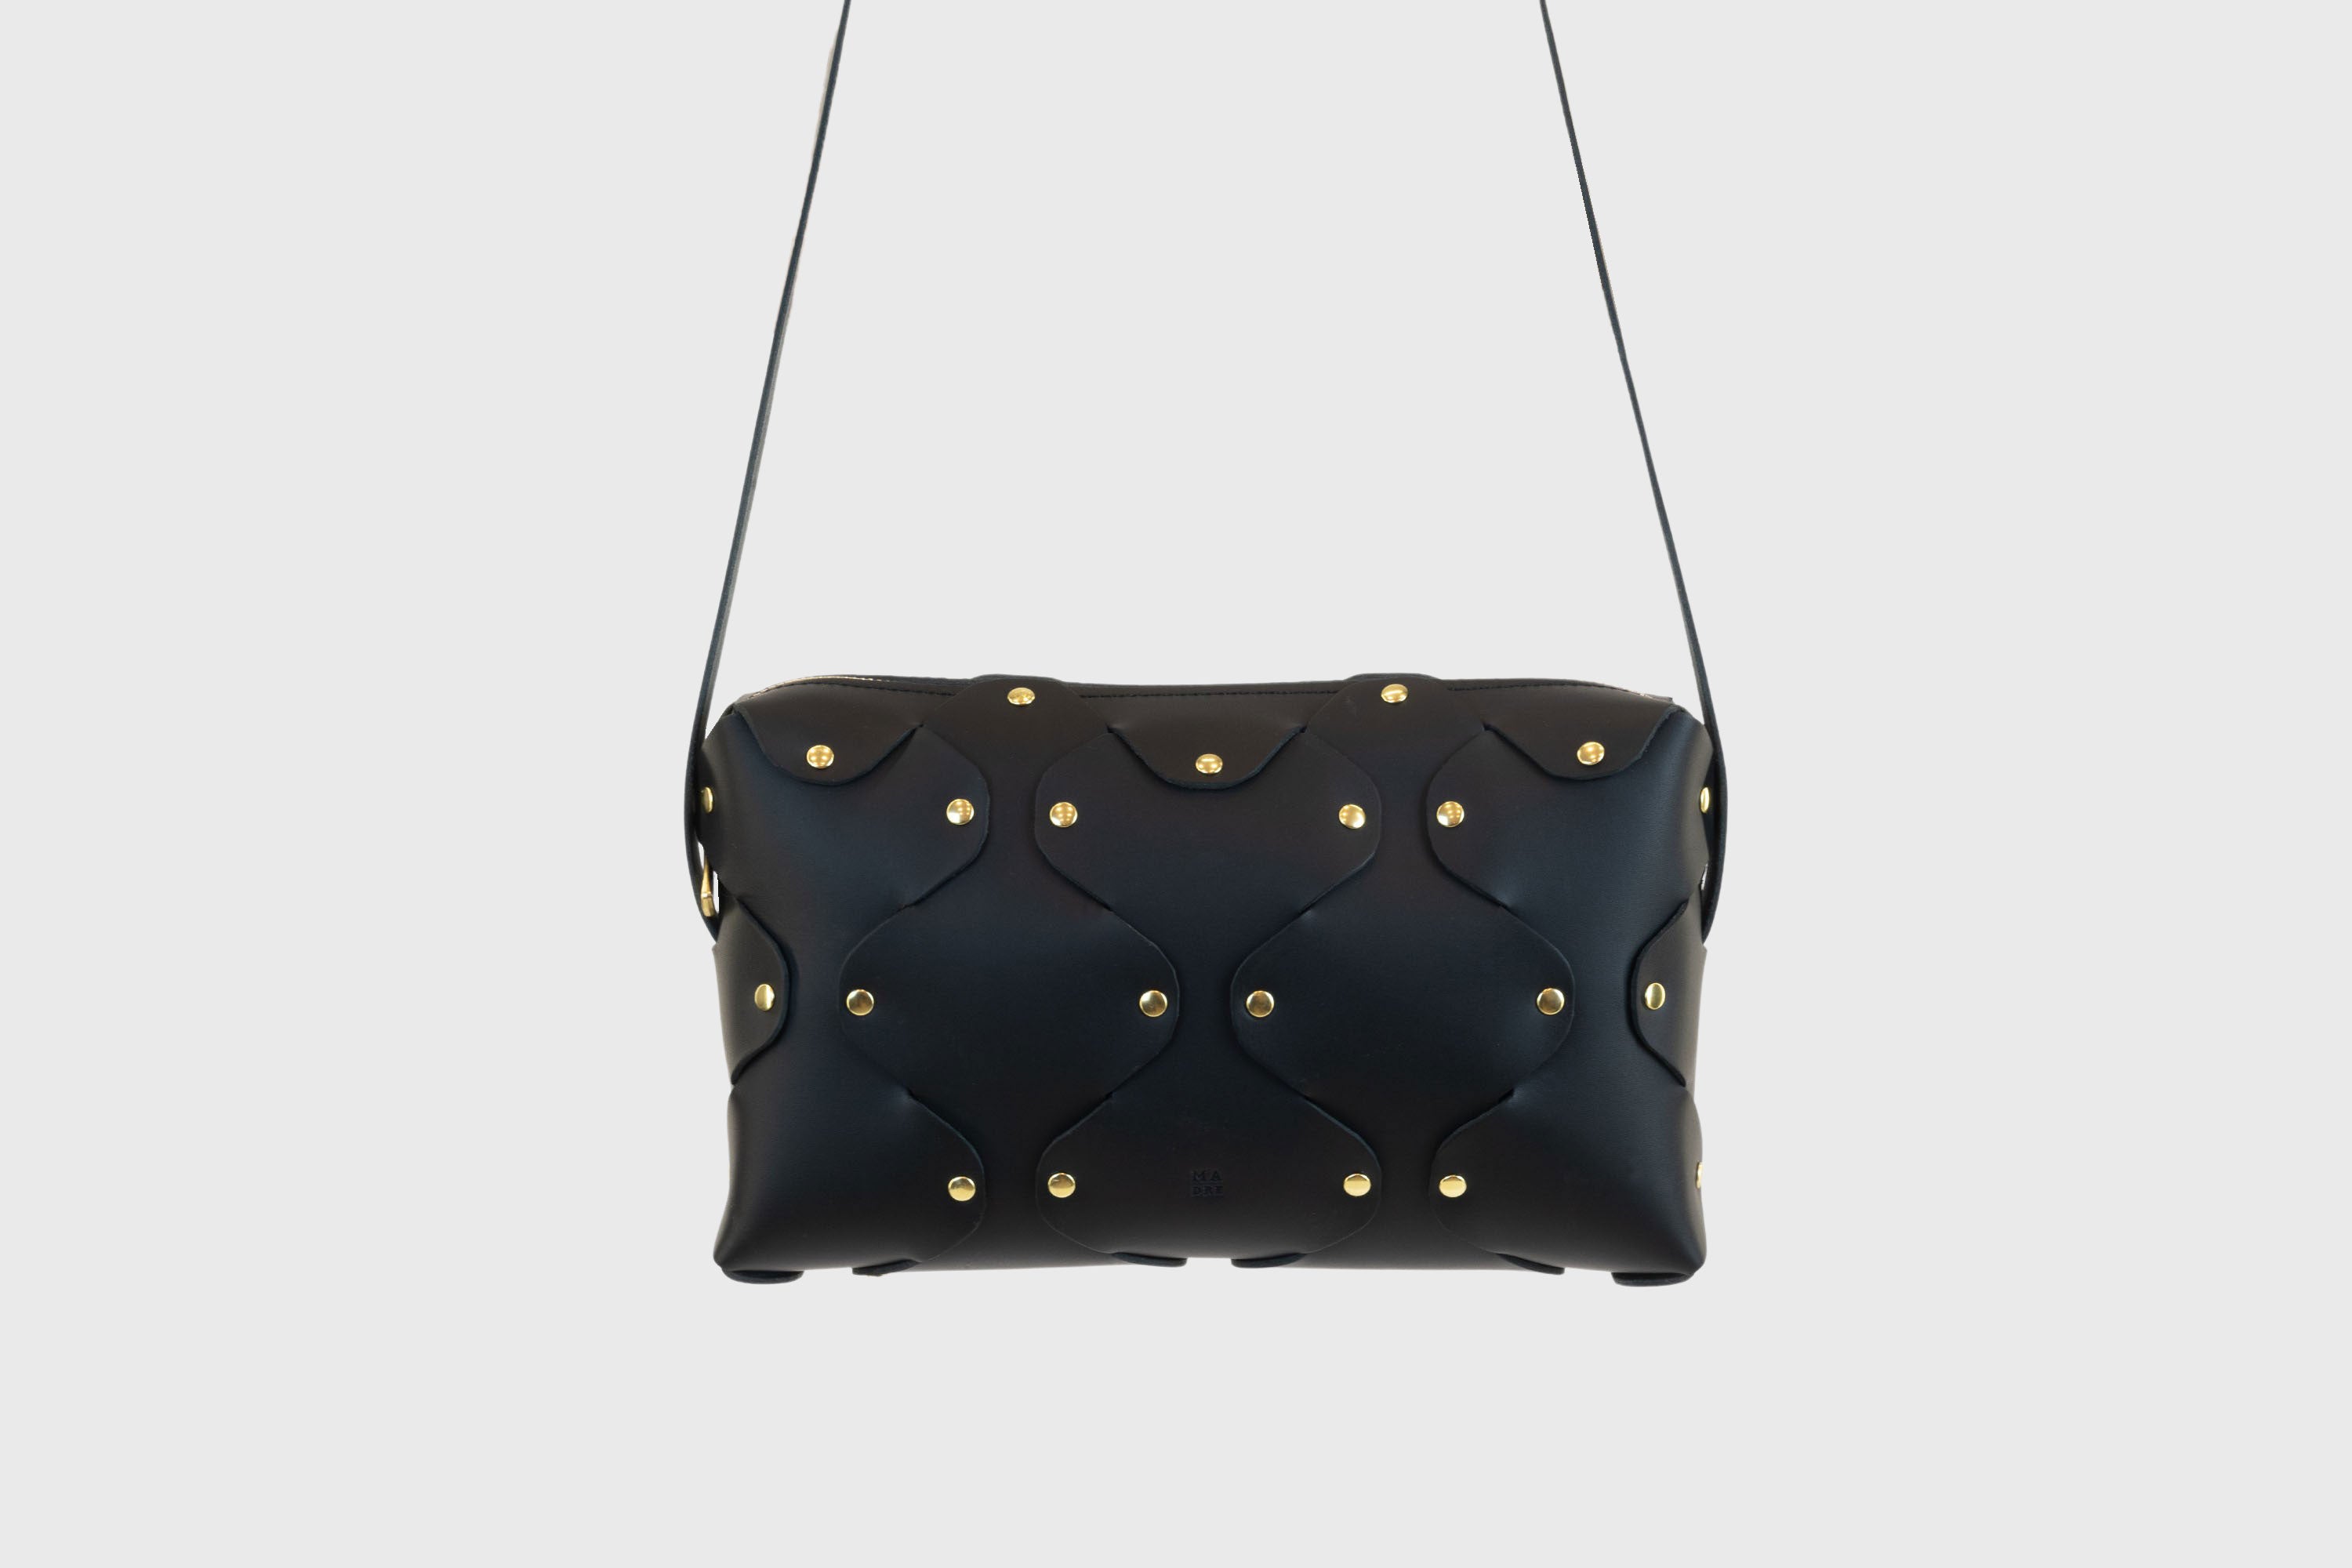 Marlin Leather Bag Black Quality Brass Rivet Designer Minimal Square Zipper Pouch Crossbody Handbag Clutch Shoulder Atelier Madre Manuel Dreesmann Barcelona